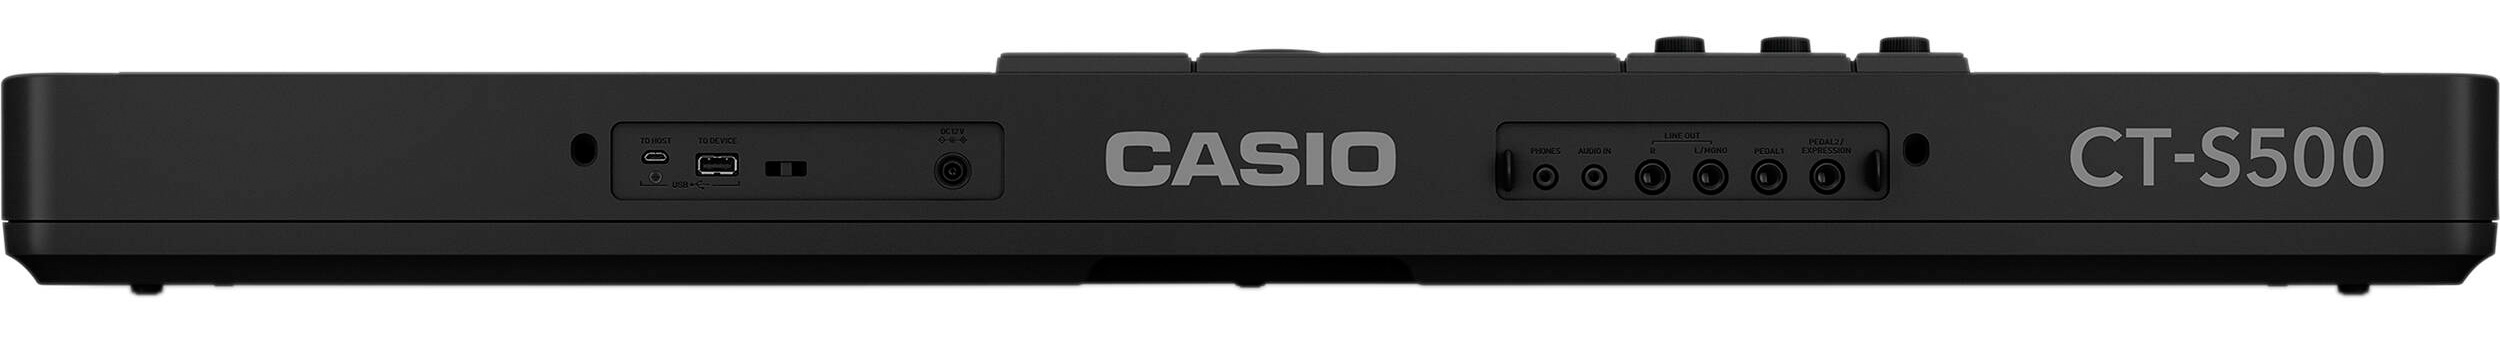 Casio CT-S500 по цене 34 900 ₽